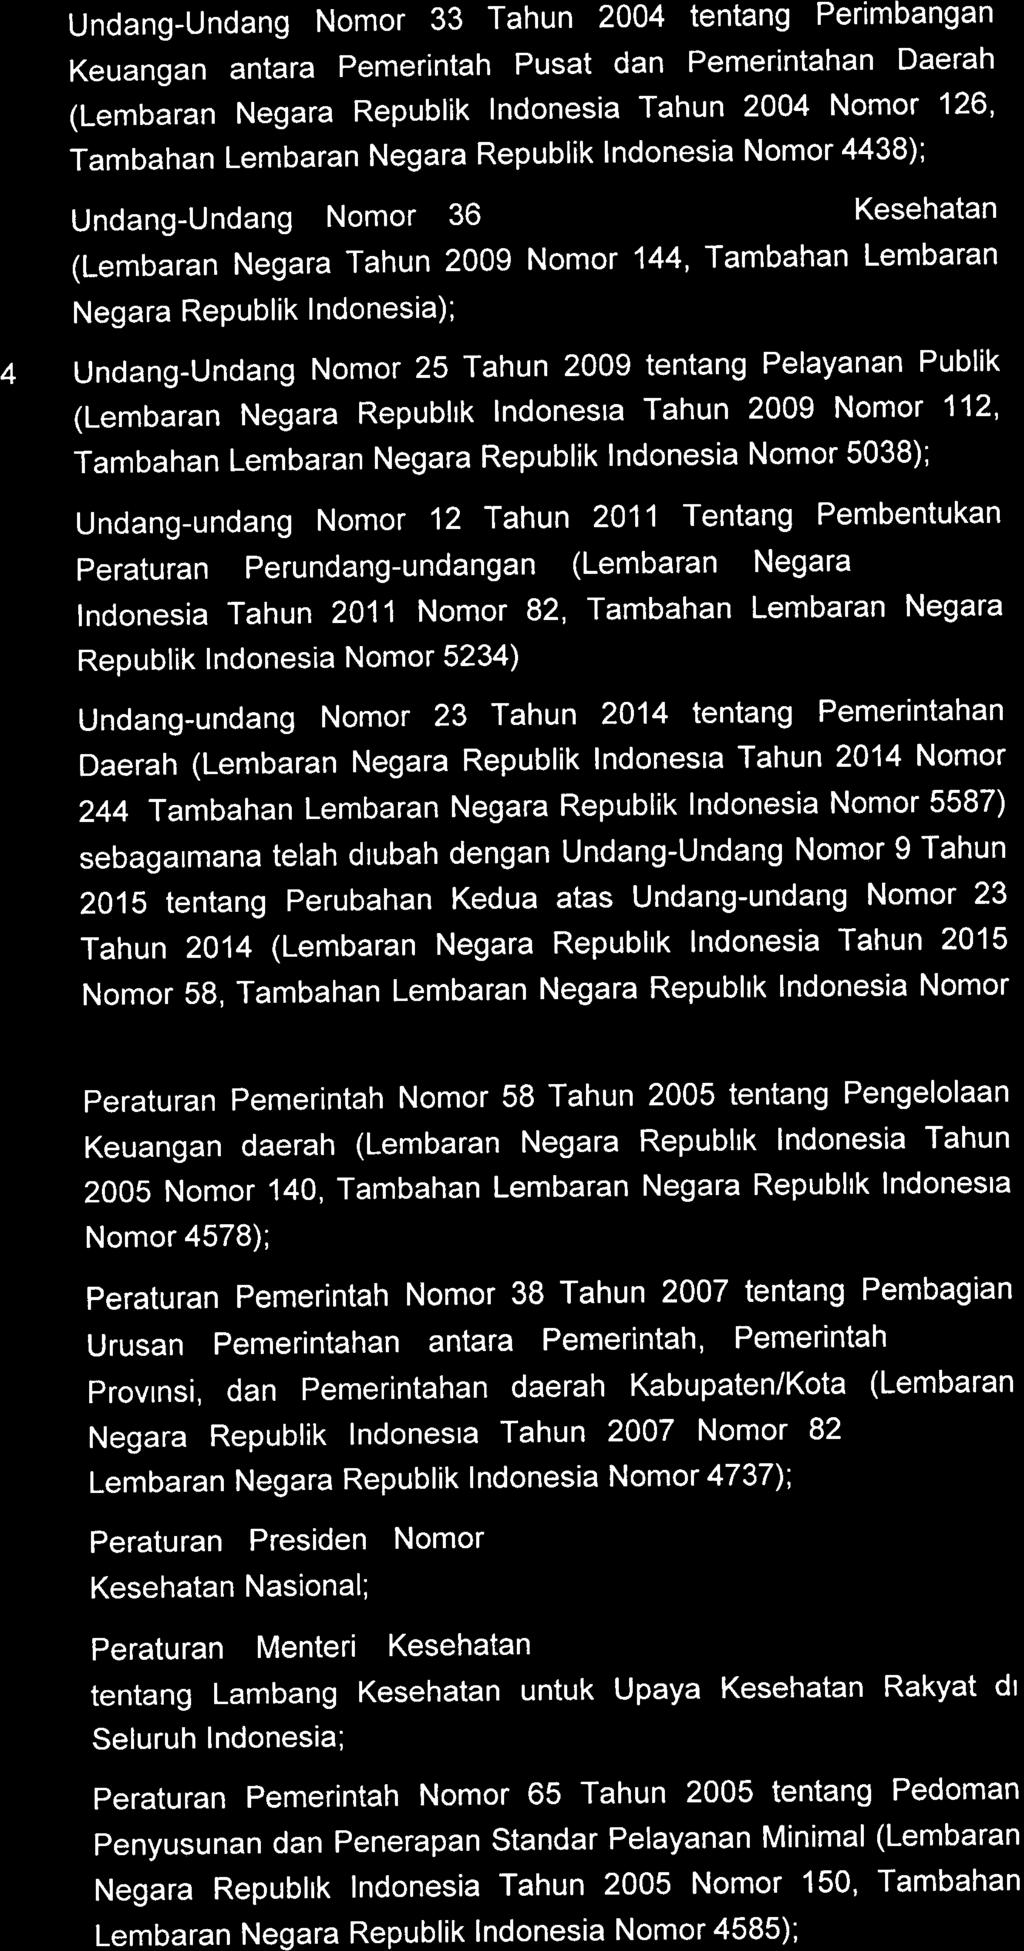 2. Undang-Undang Nomor 33 Tahun 2004 tentang Perimbangan Keuangan antara Pemerintah Pusat dan Pemerintahan Daerah (Lembaran Negara Republik Indonesia Tahun 2004 Nomor 126, Tambahan Lembaran Negara